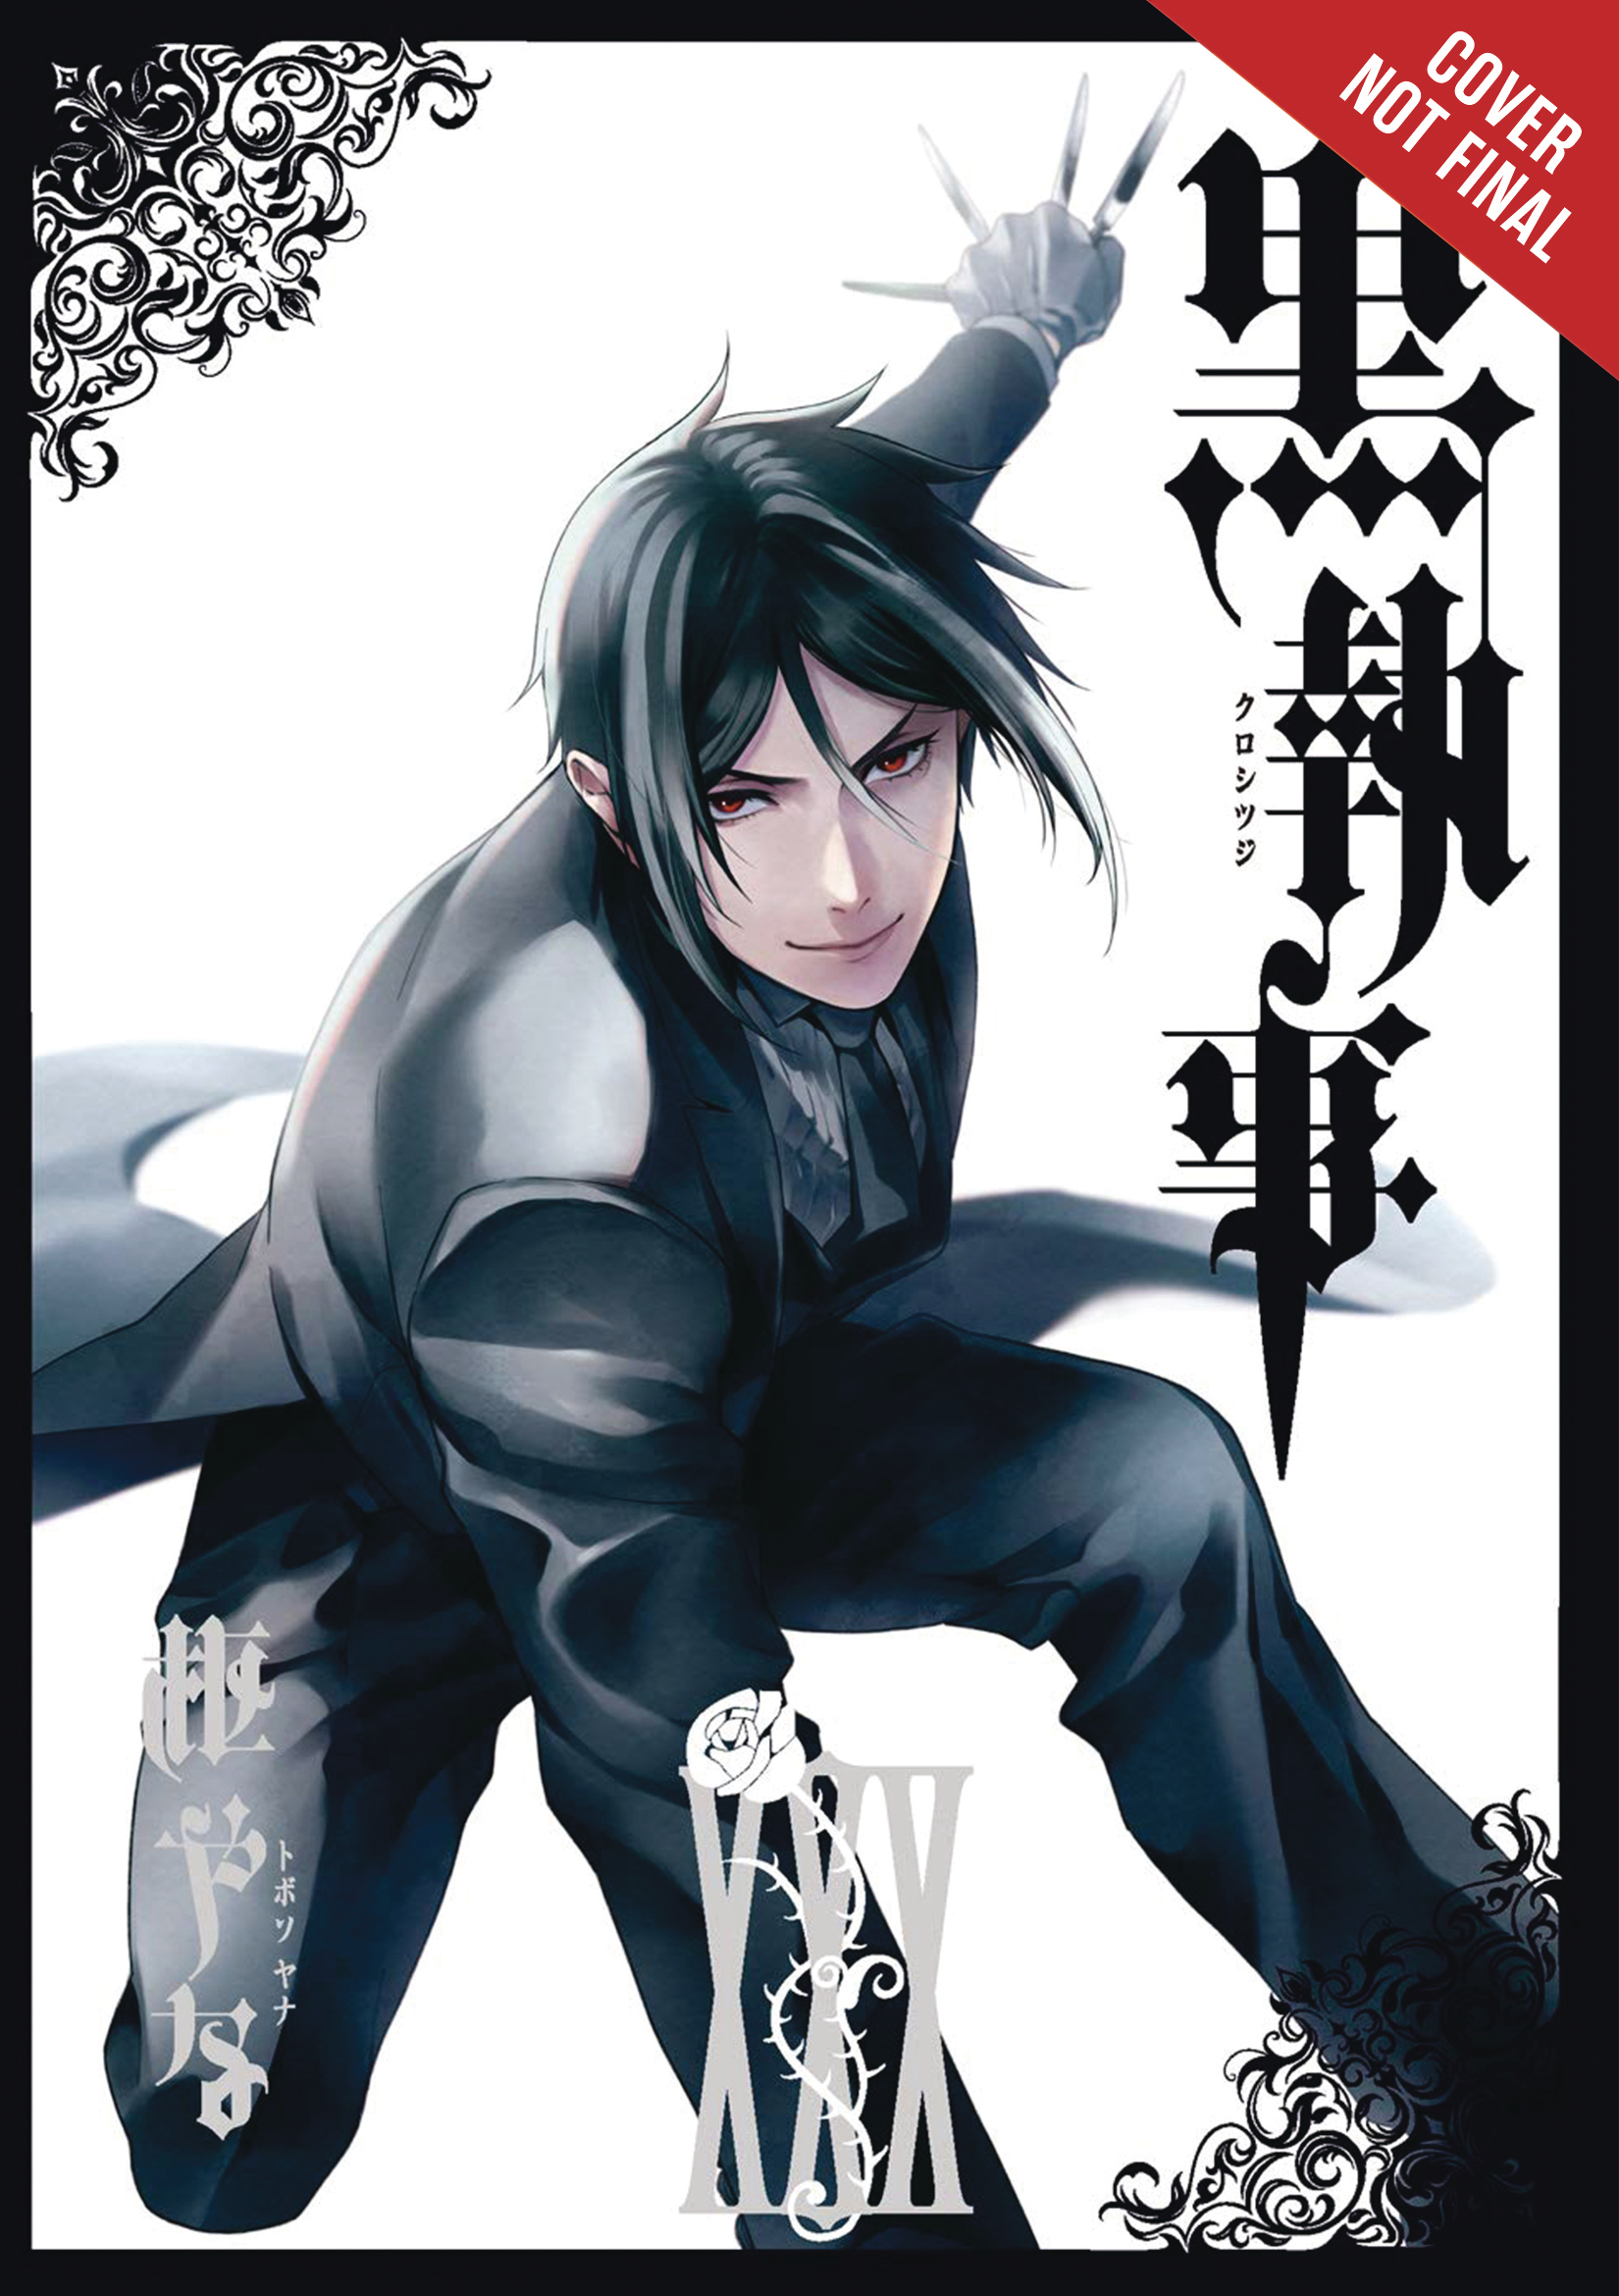 Black Butler Manga Volume 30